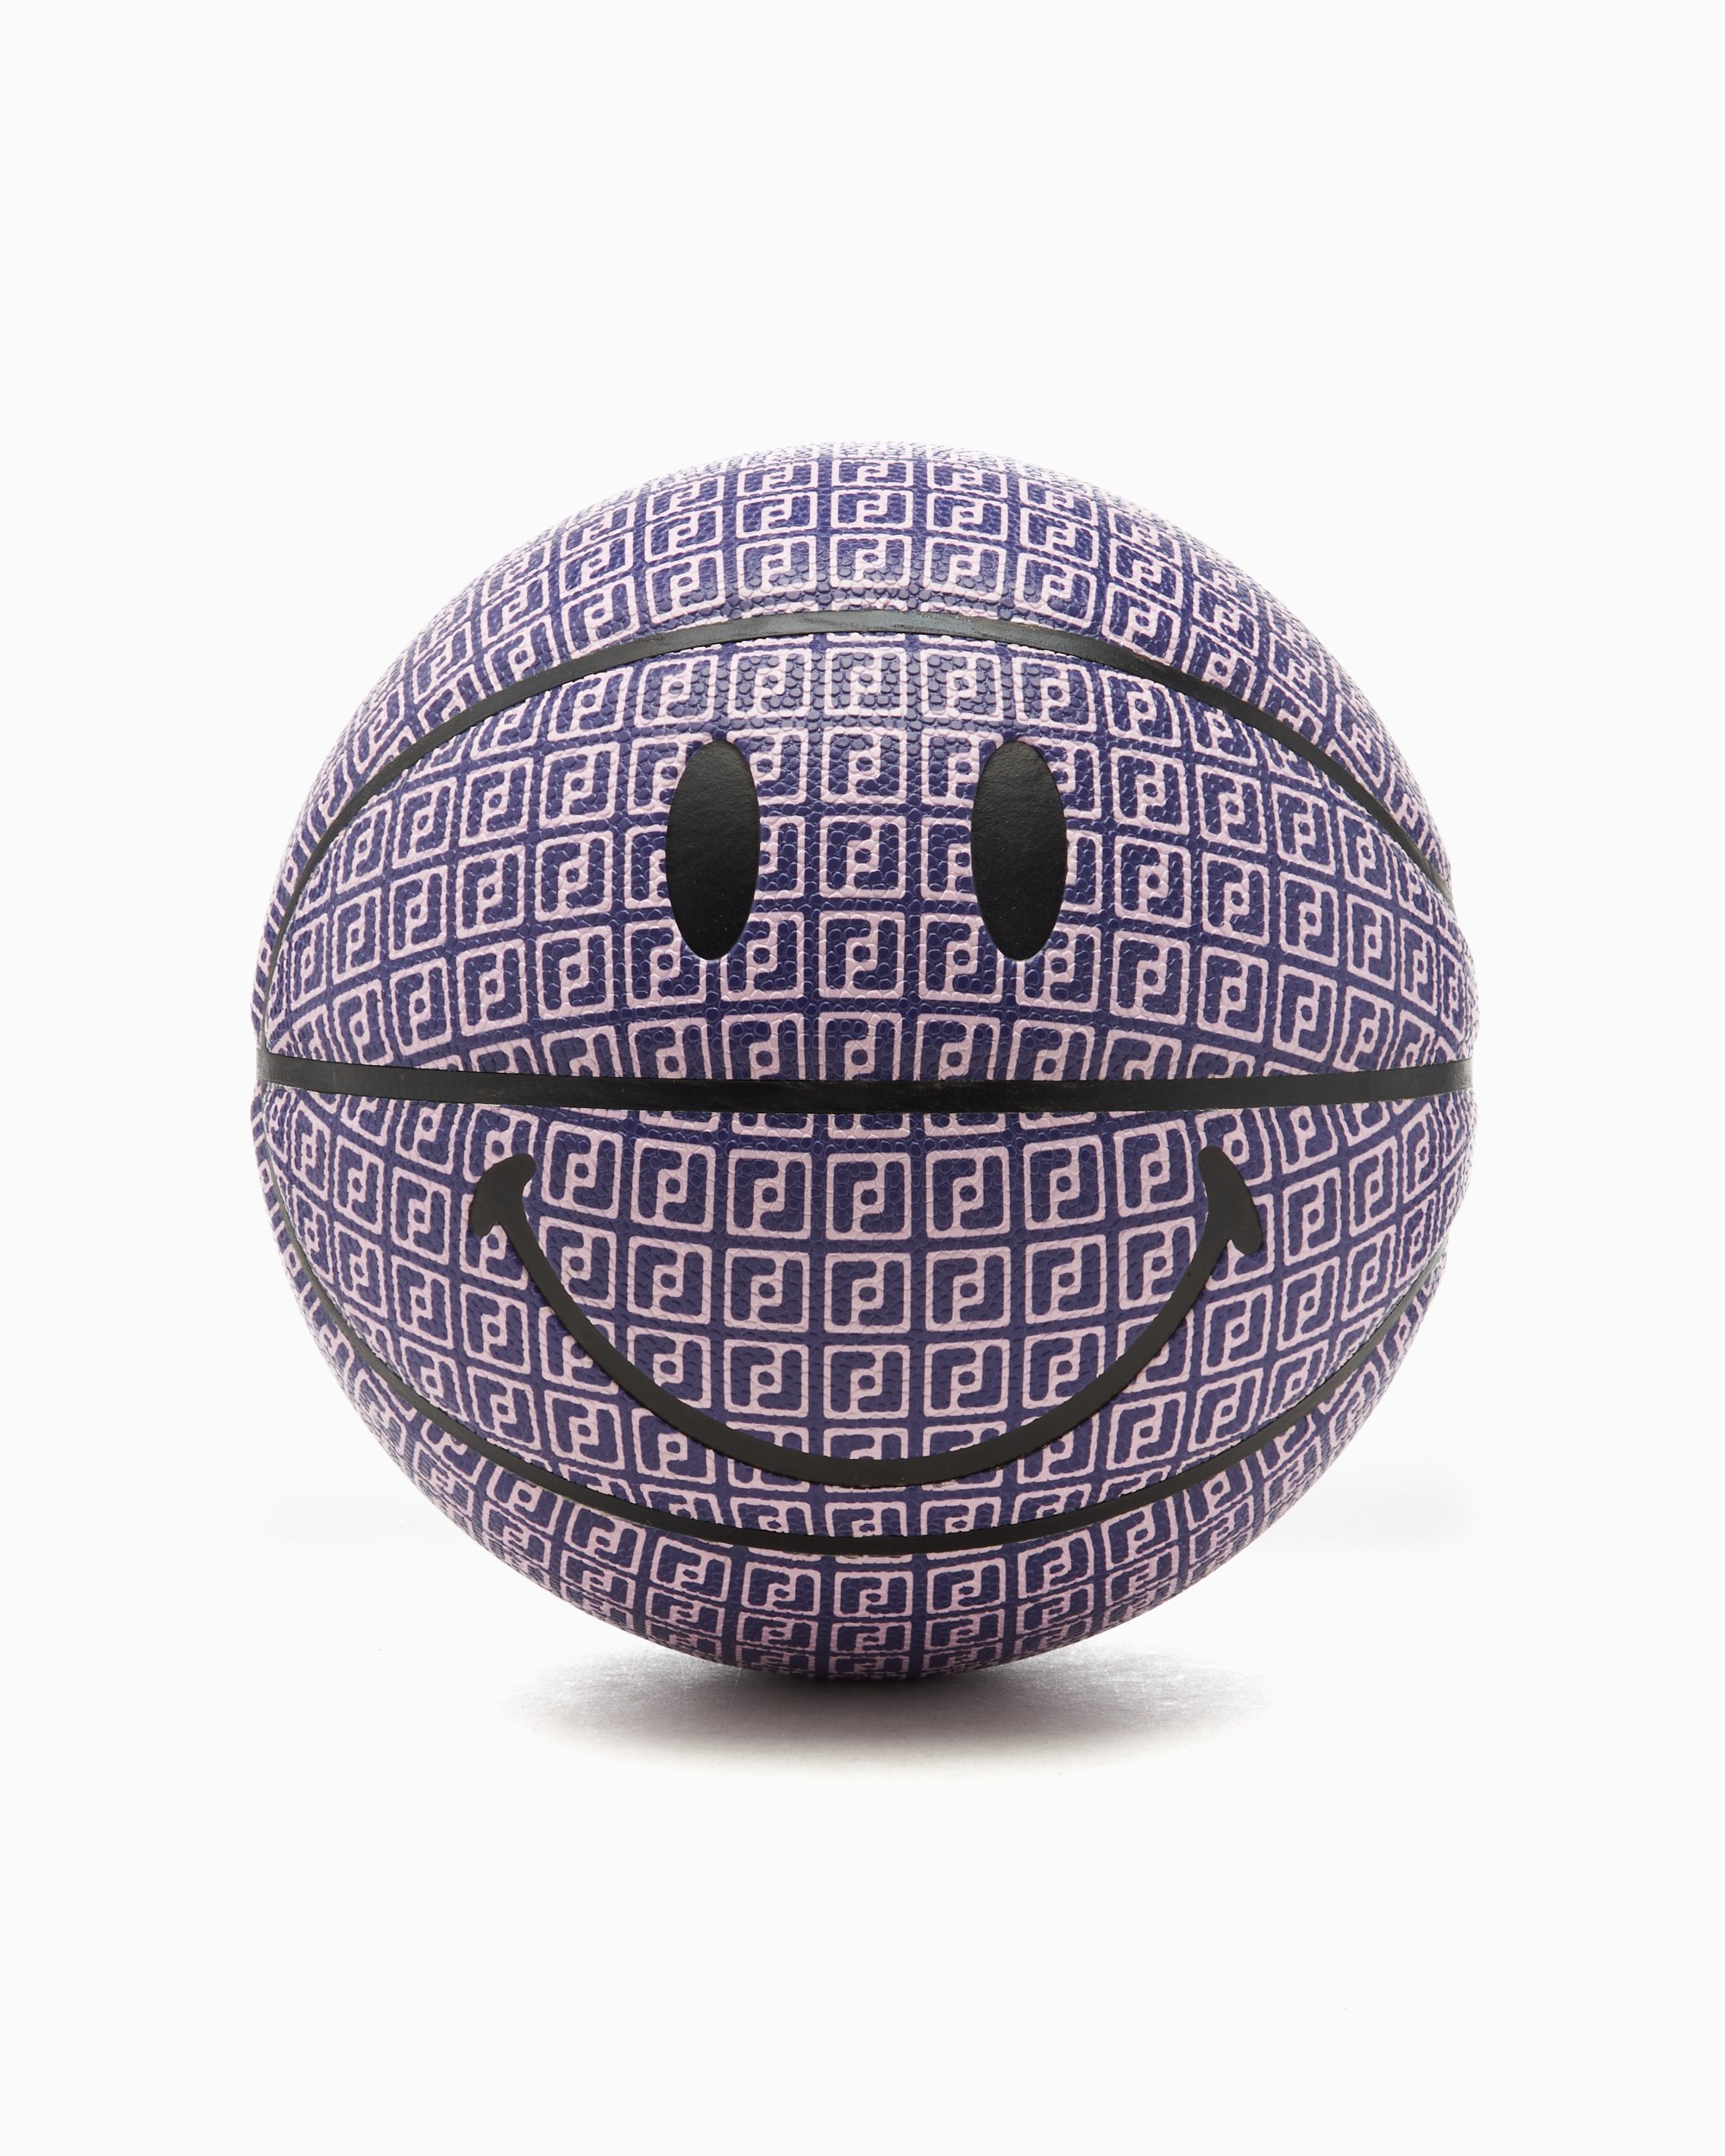 FOOTDISTRICT x MARKET Smiley Allover Printed Logo Basketball 